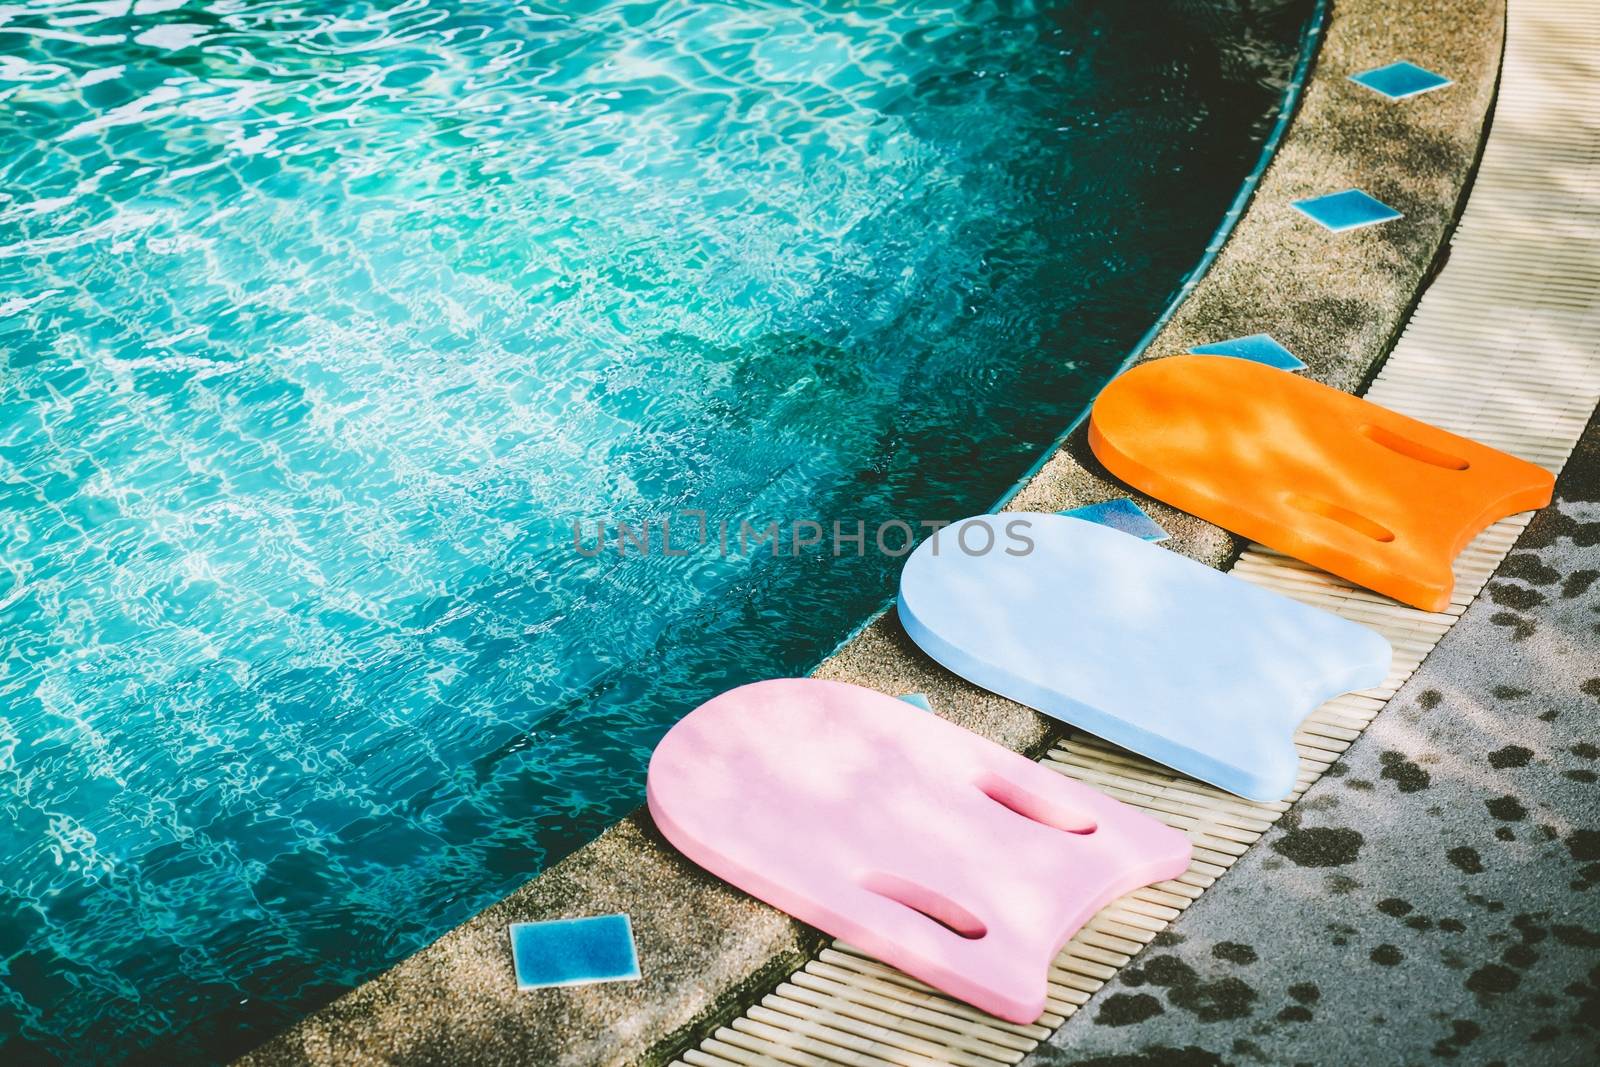 Kickboard equipment provided in a refreshing blue swimming pool.